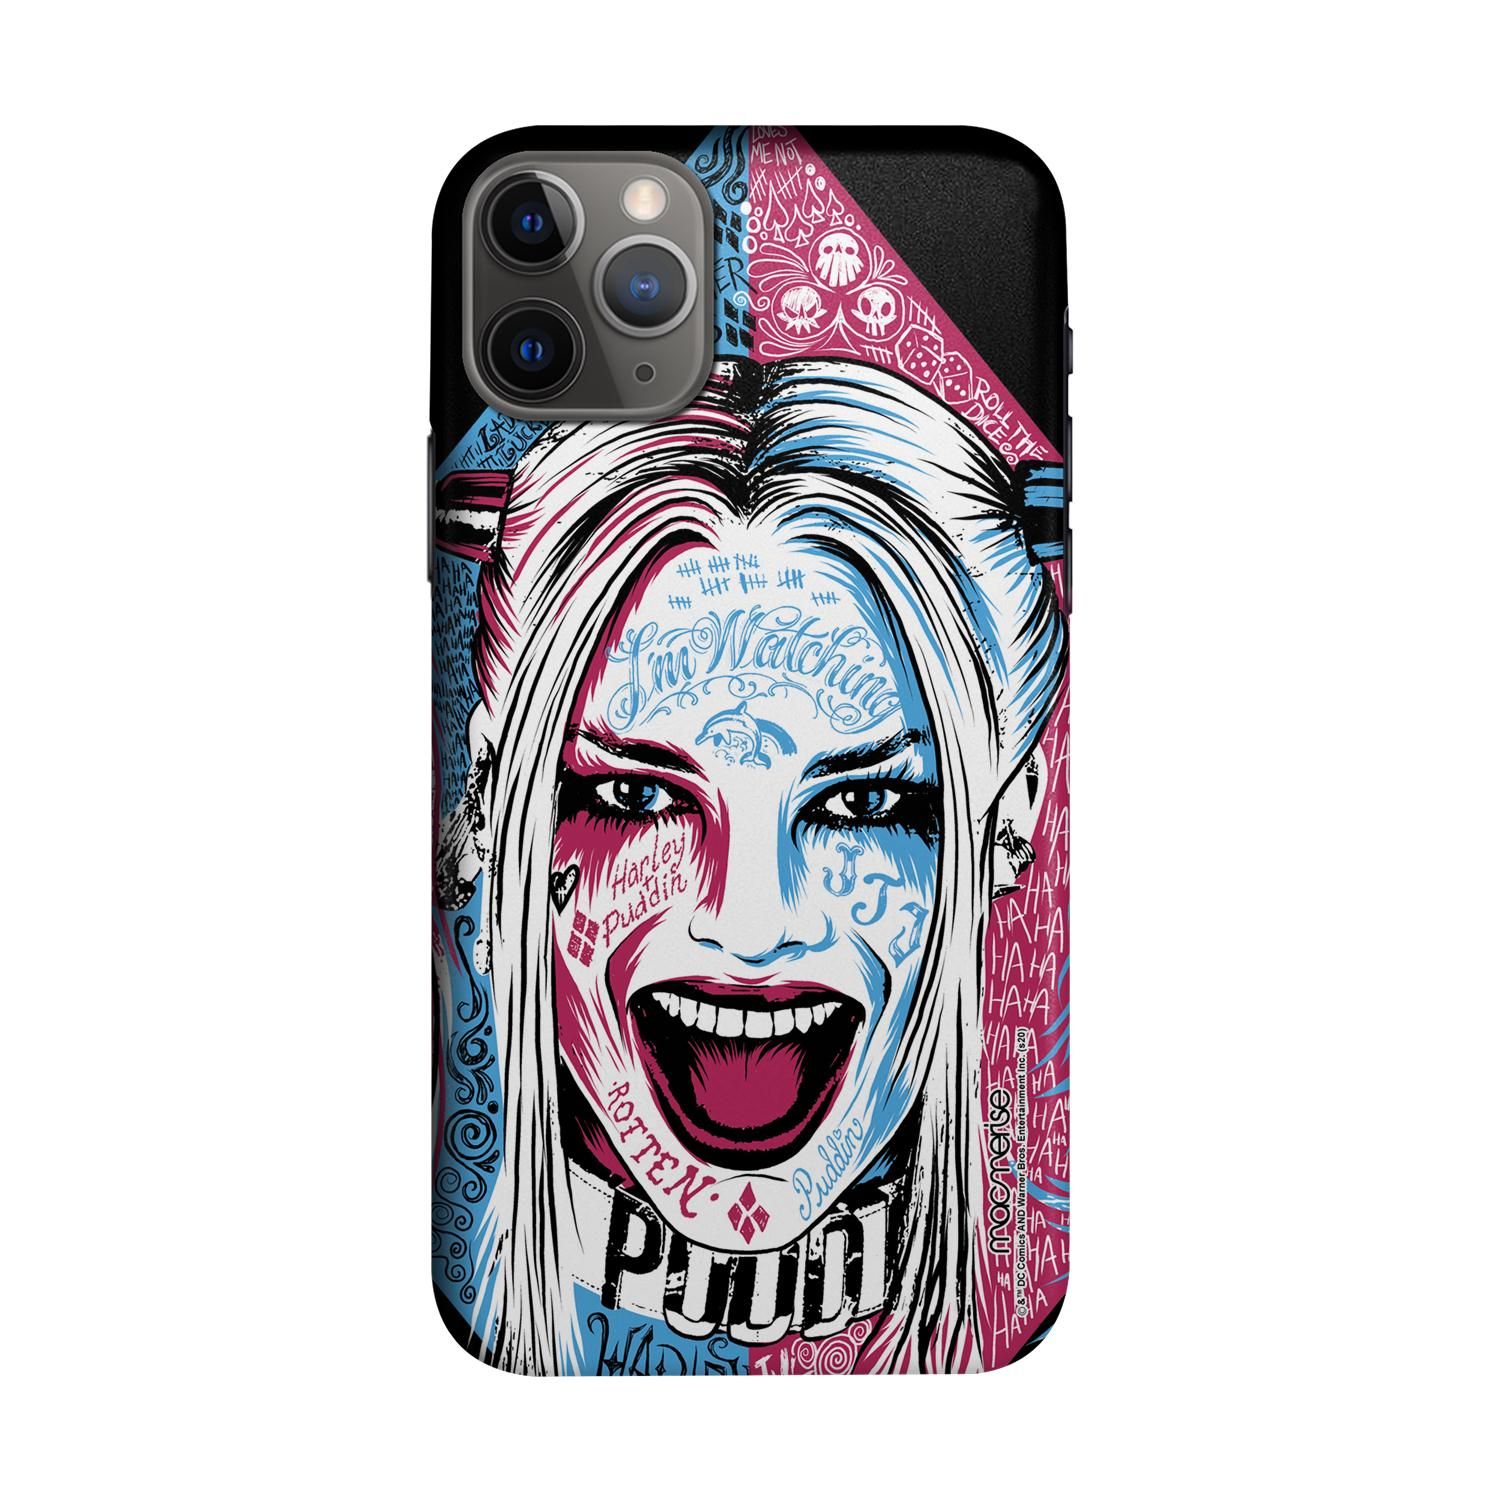 Buy Wicked Harley Quinn - Sleek Phone Case for iPhone 11 Pro Online